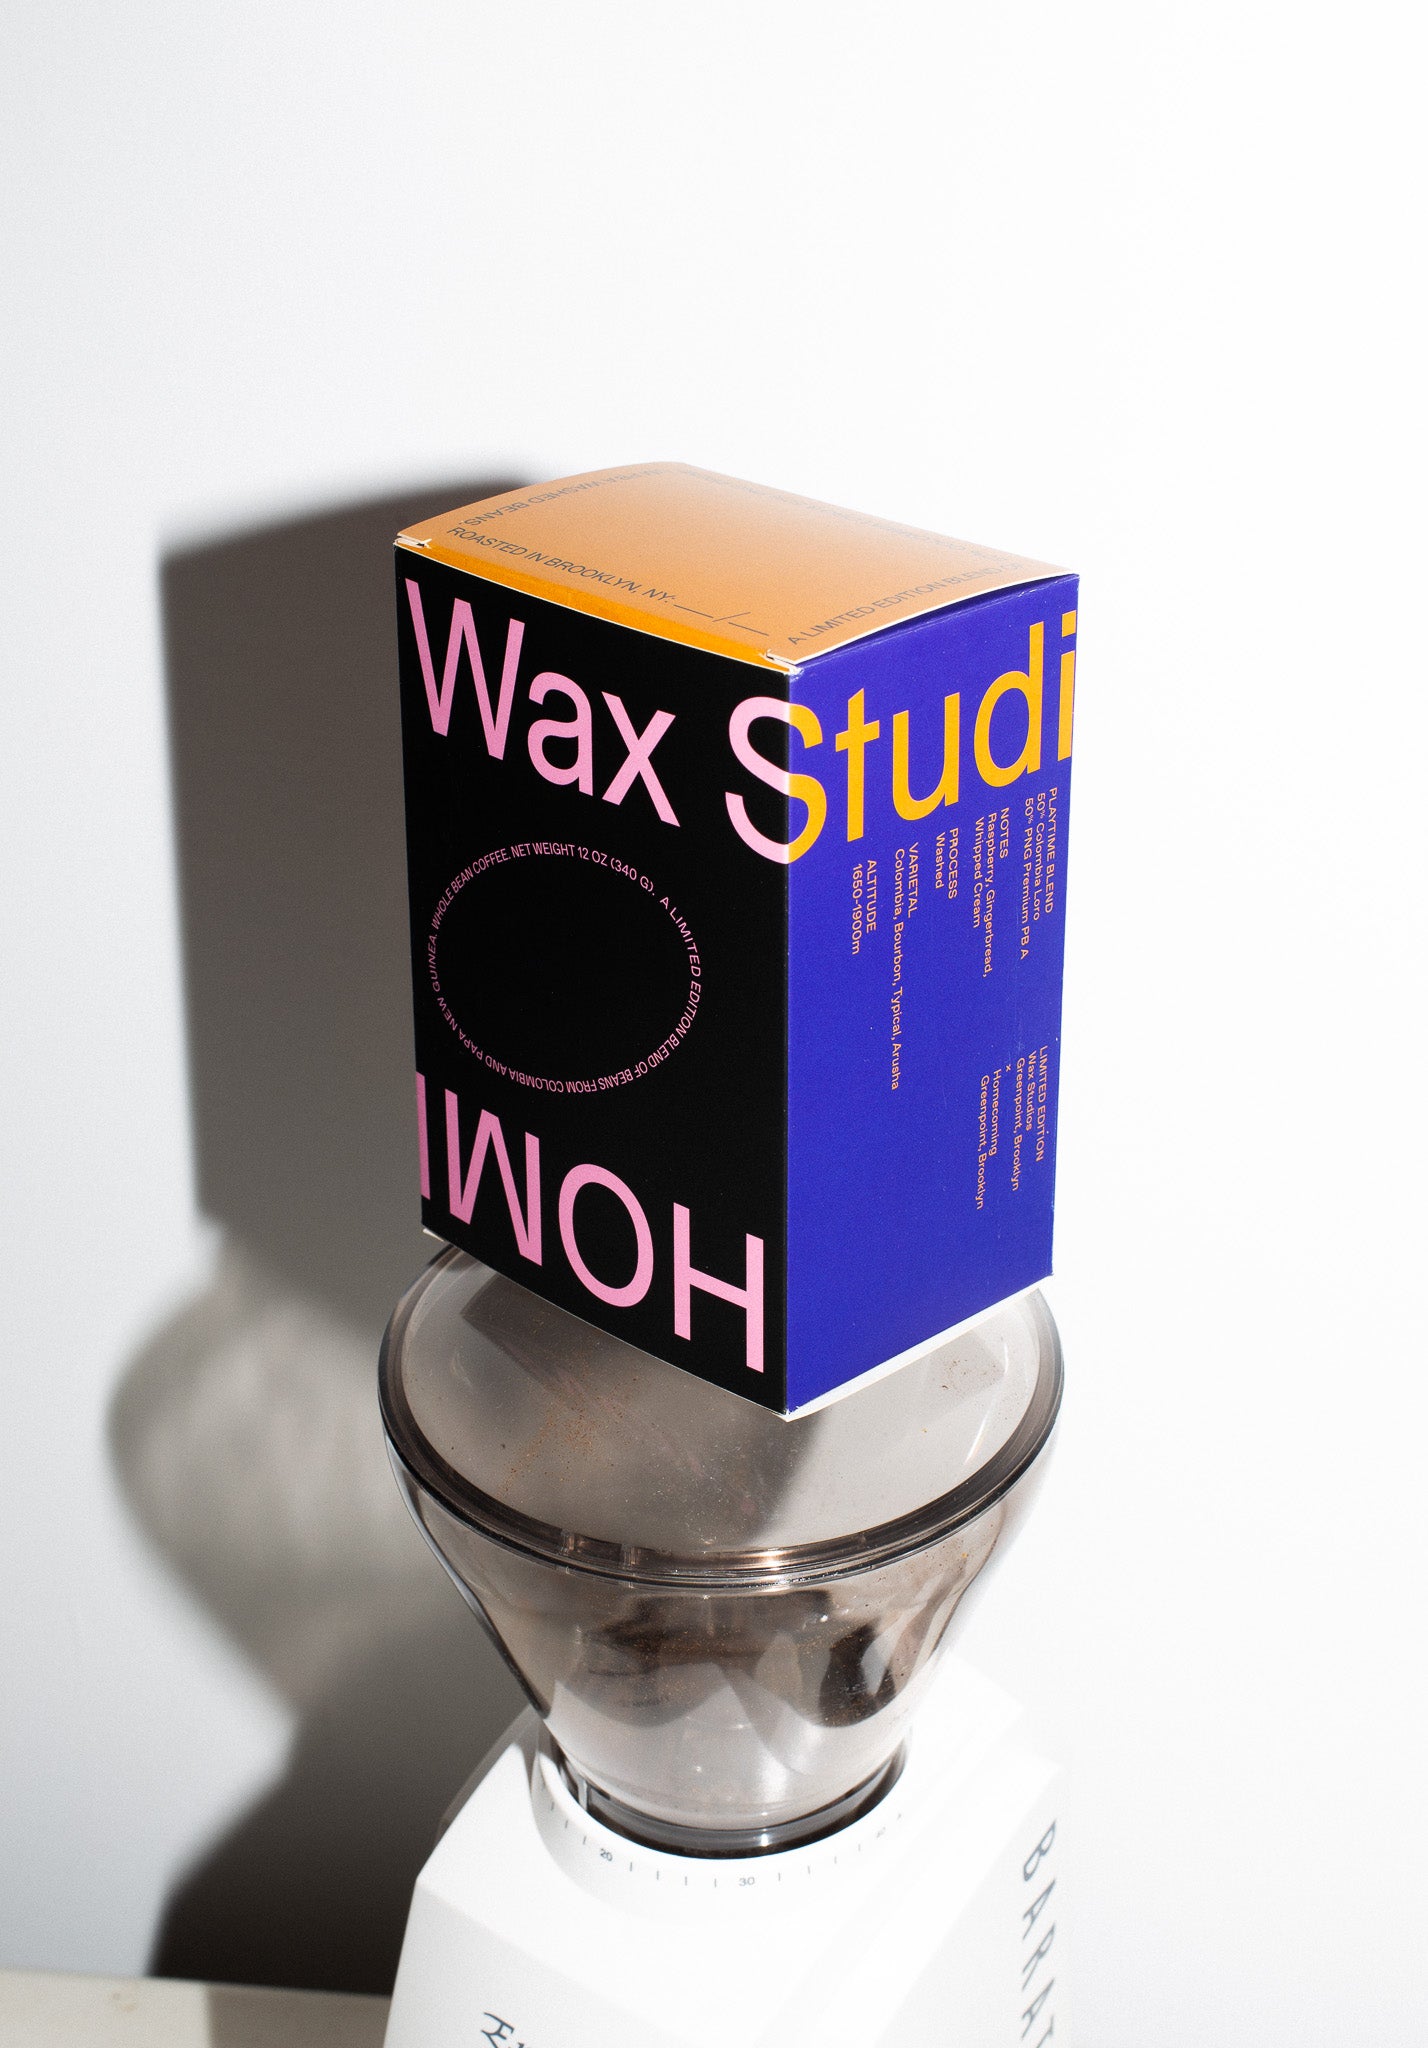 Wax Studios